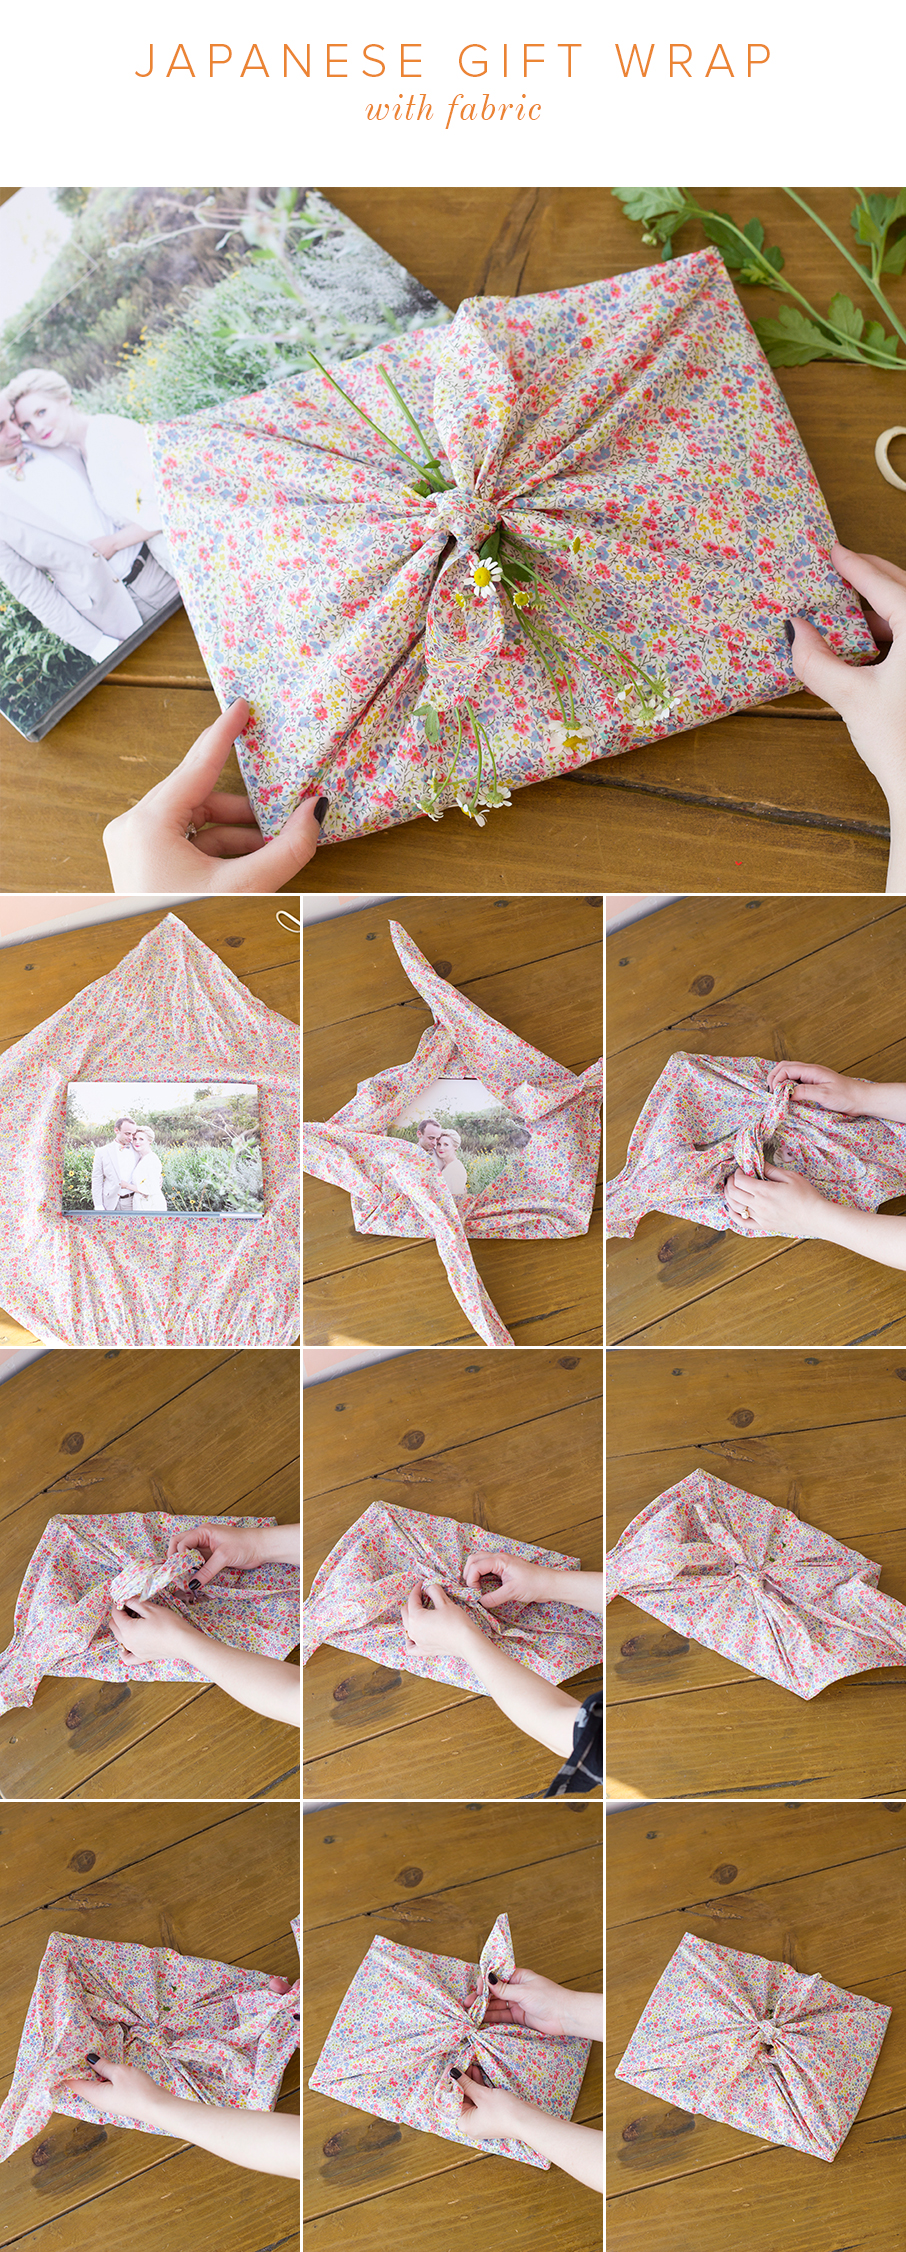 furoshiki fabric wrapping Japanese